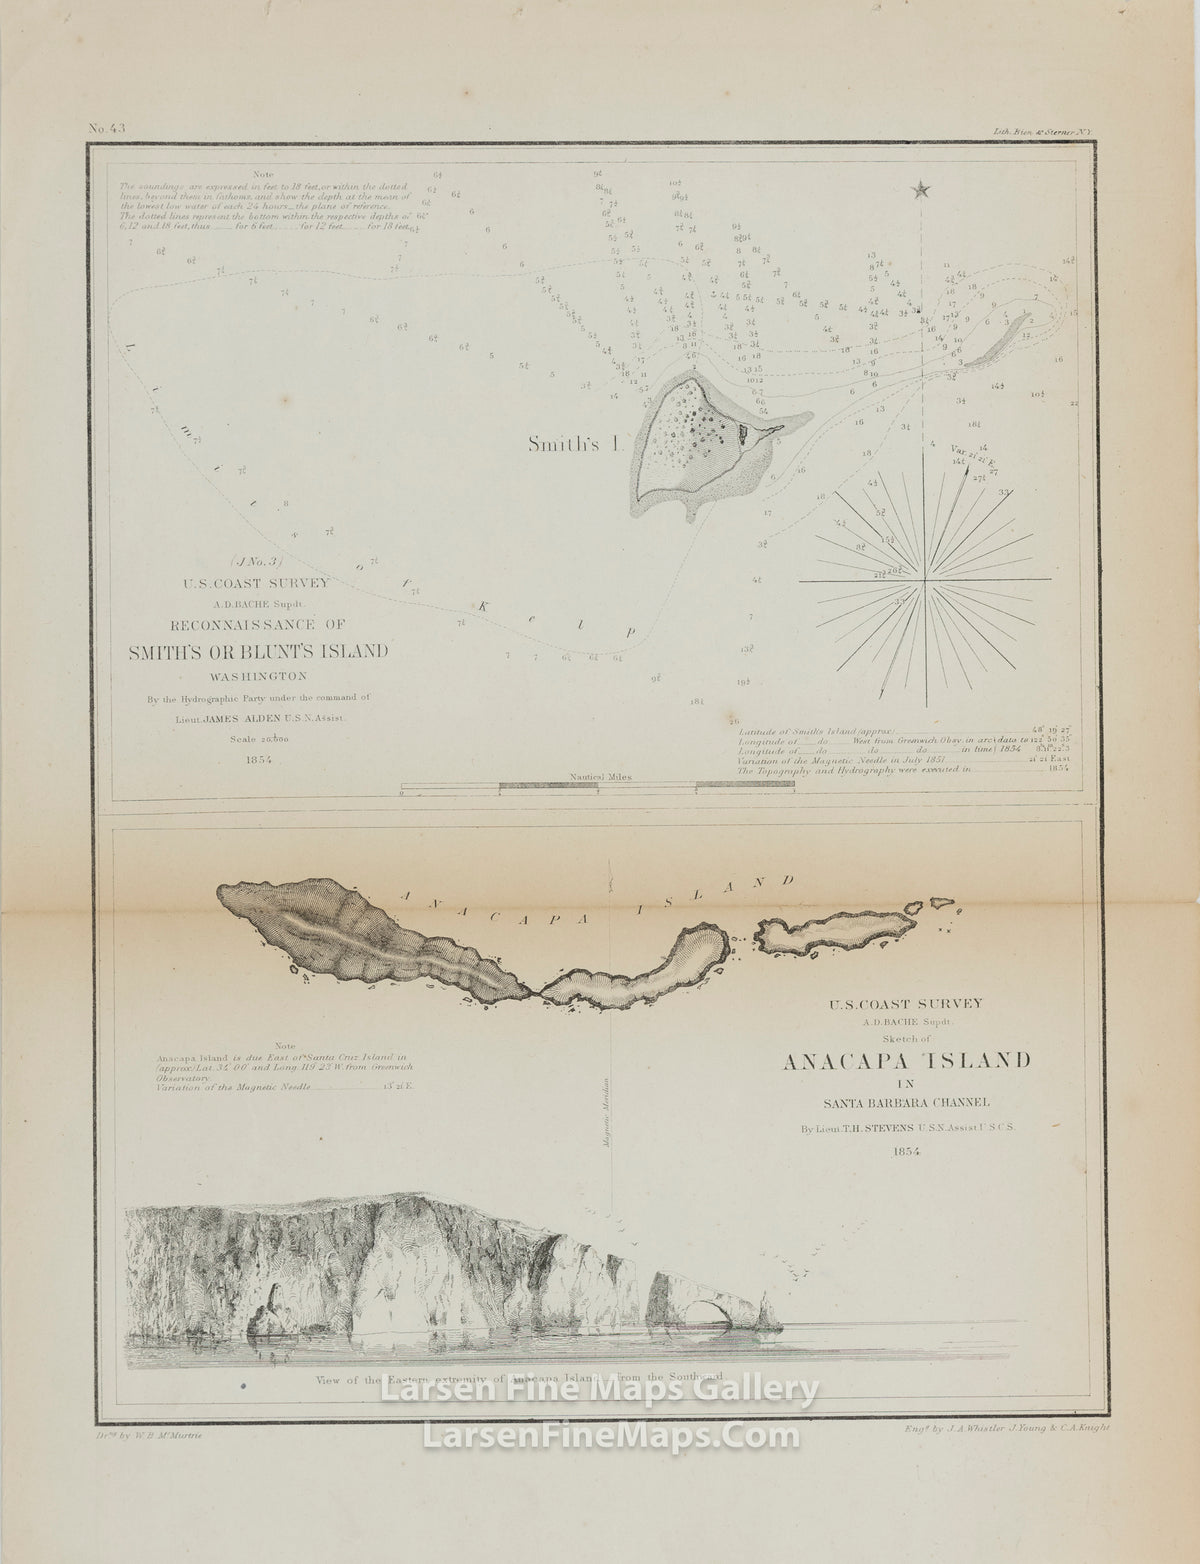 Anacapa Island in Santa Barbara Channel & Reconnaissance of Smith's Island